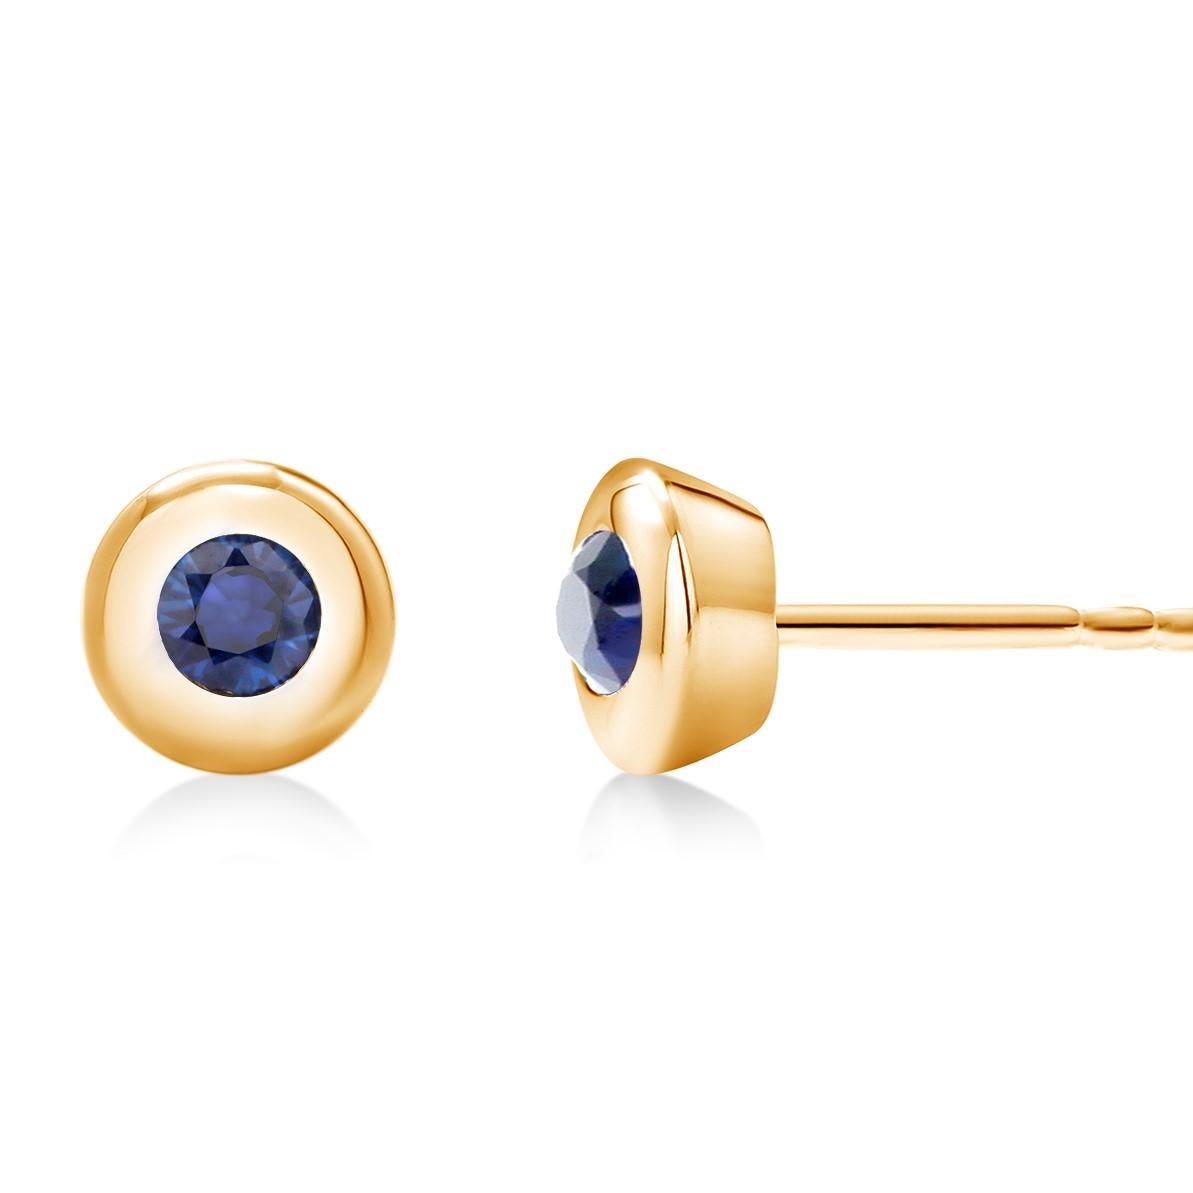 Contemporary Yellow Gold Bezel Set Sapphire Stud Earrings Weighing 0.30 Carat